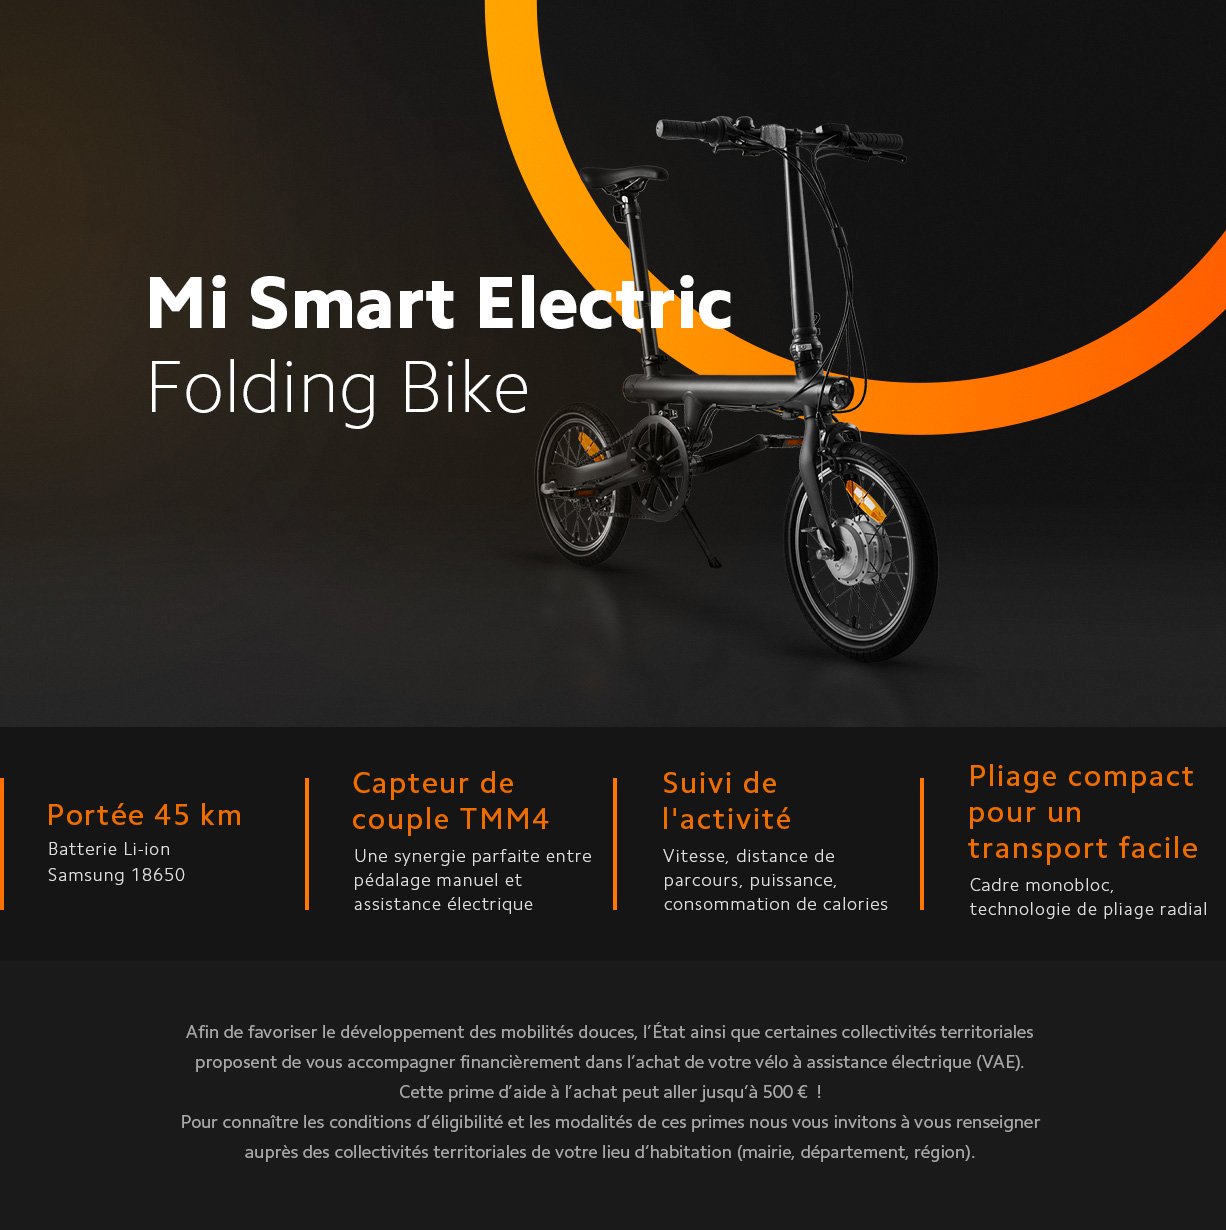 Image: Xiaomi Mi Smart Electric Folding Bike - Compact and Convenient Transportation Solution.